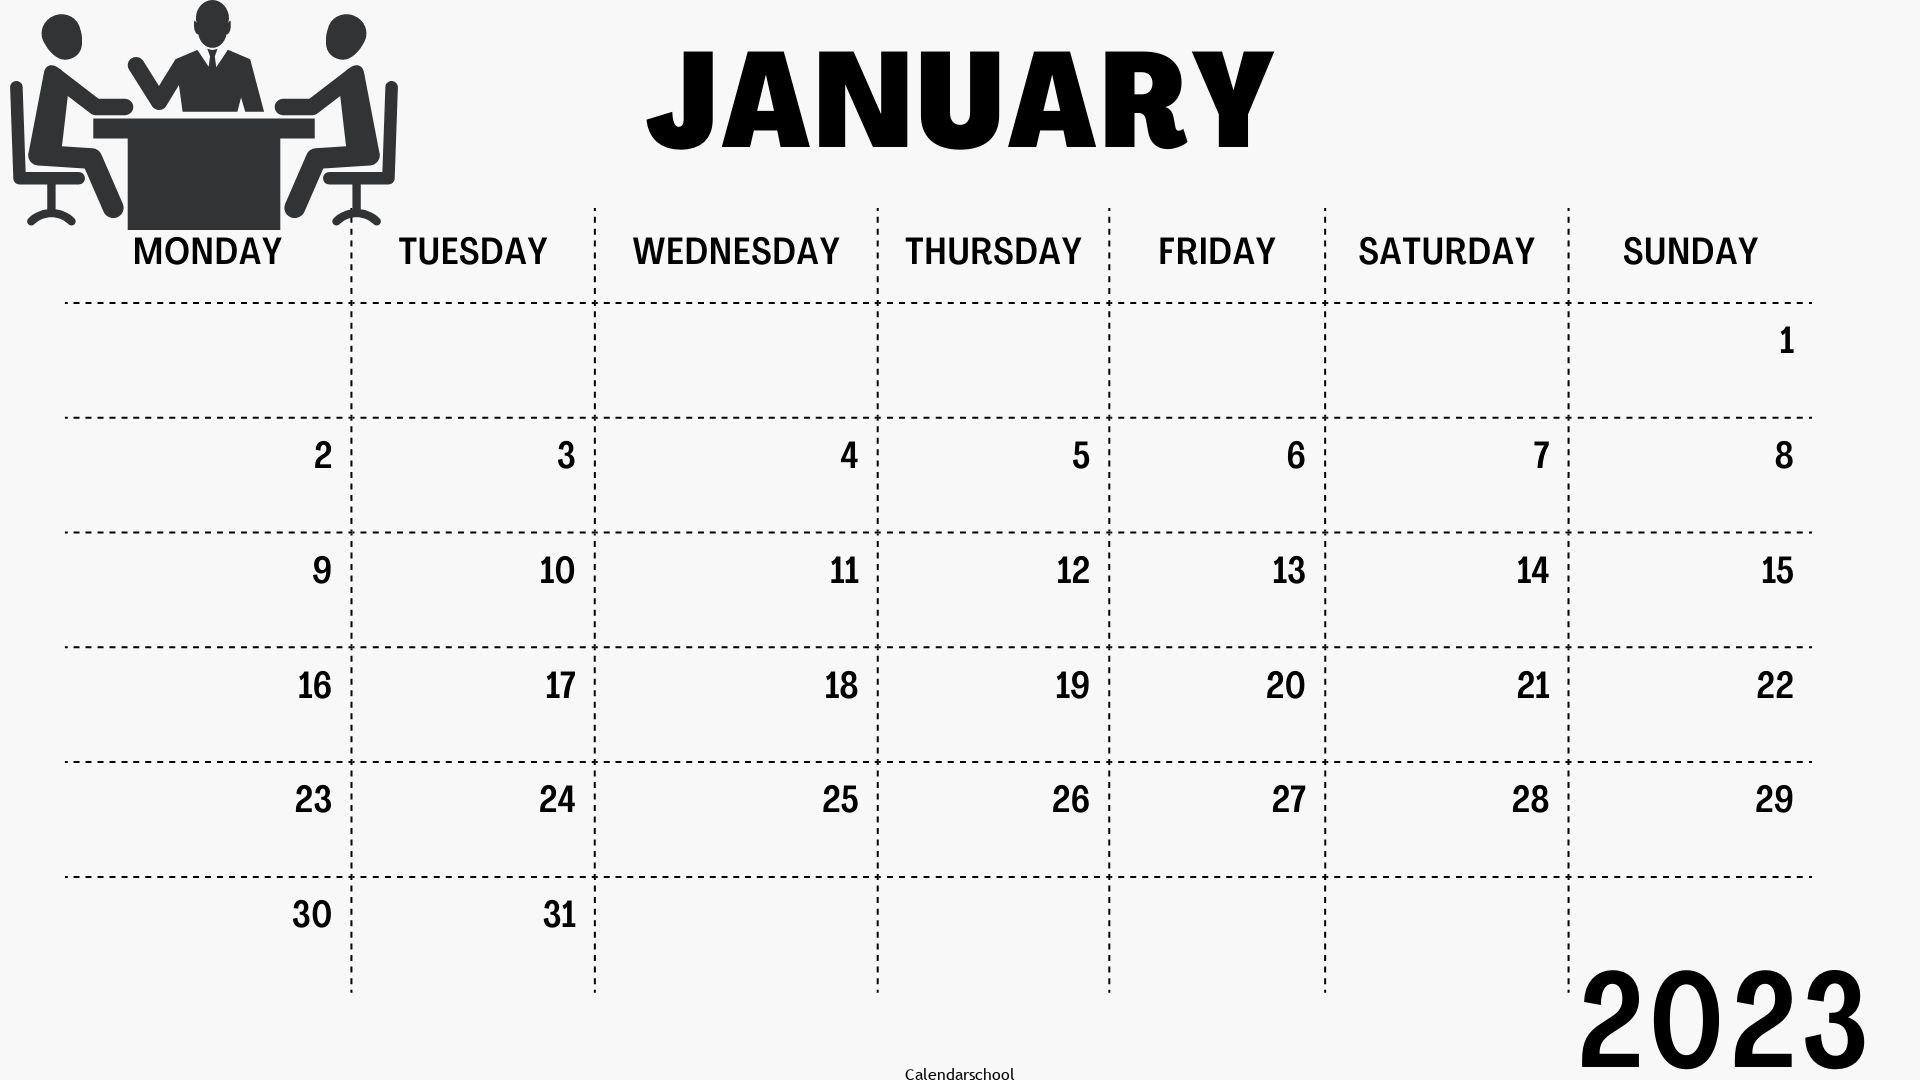 January 2023 Calendar For Printing